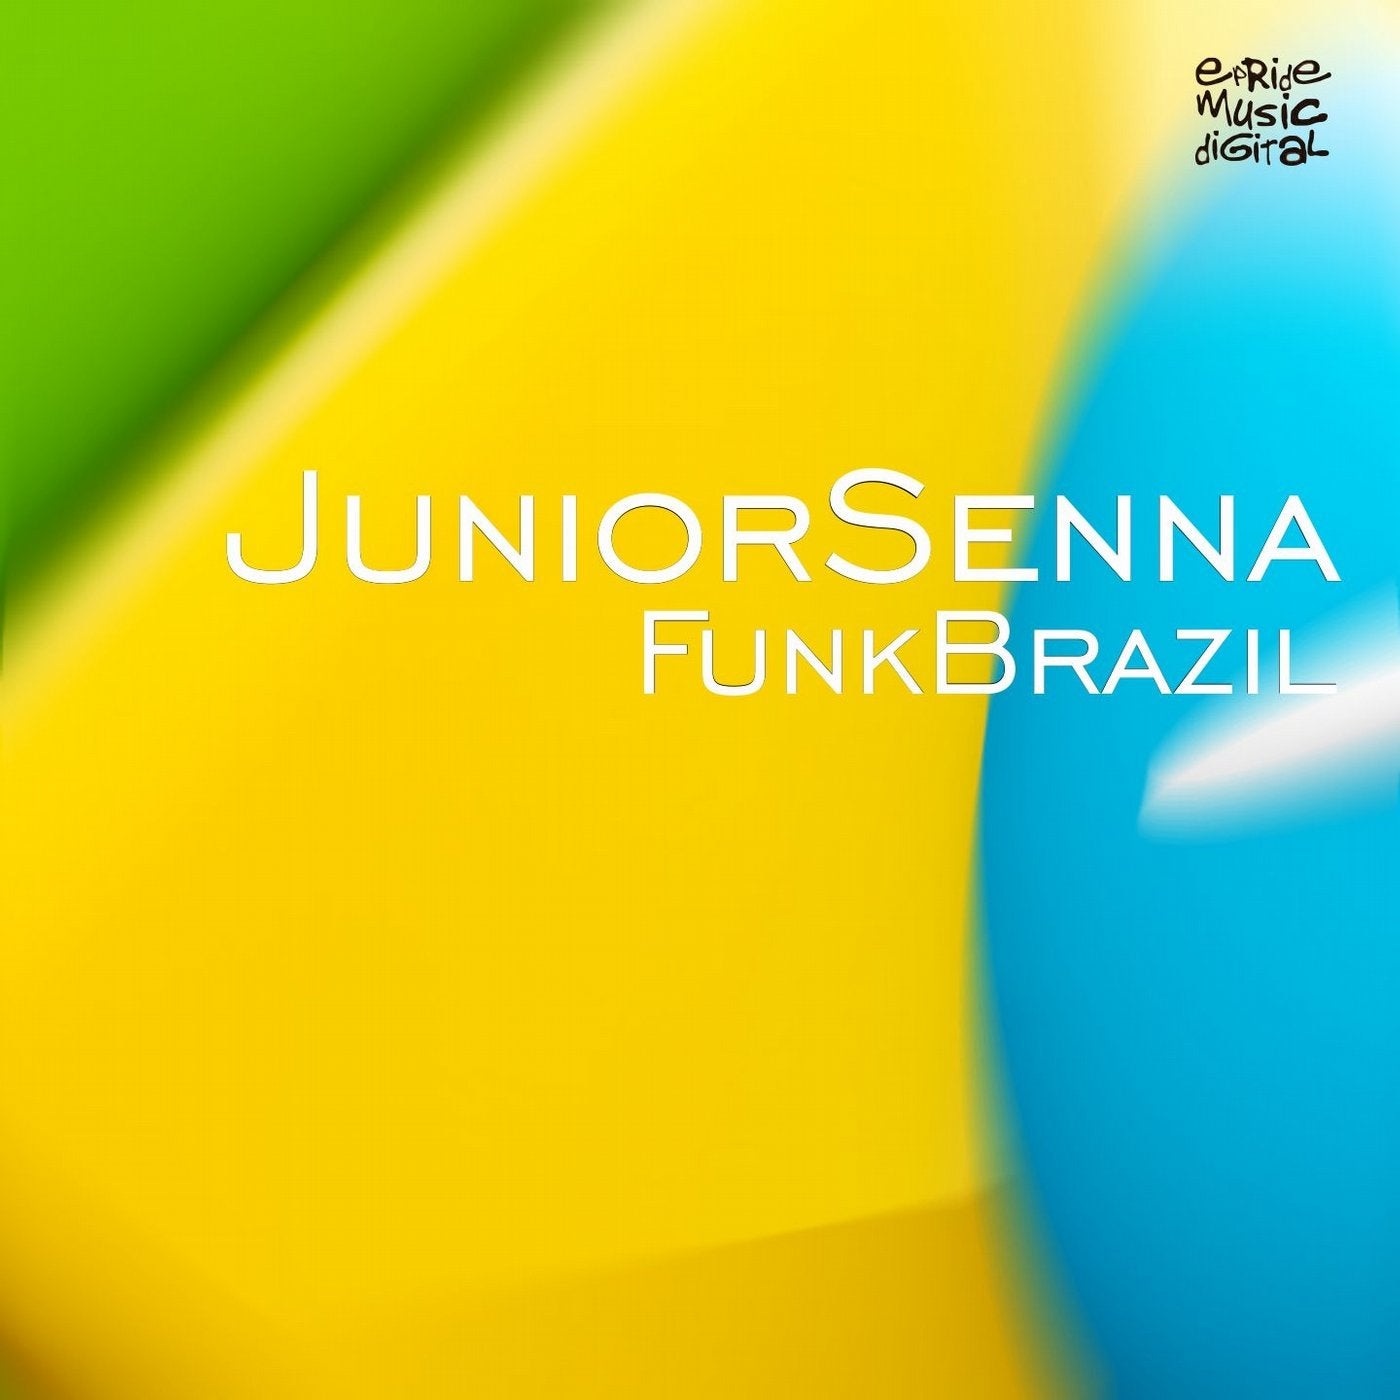 Funk Brazil